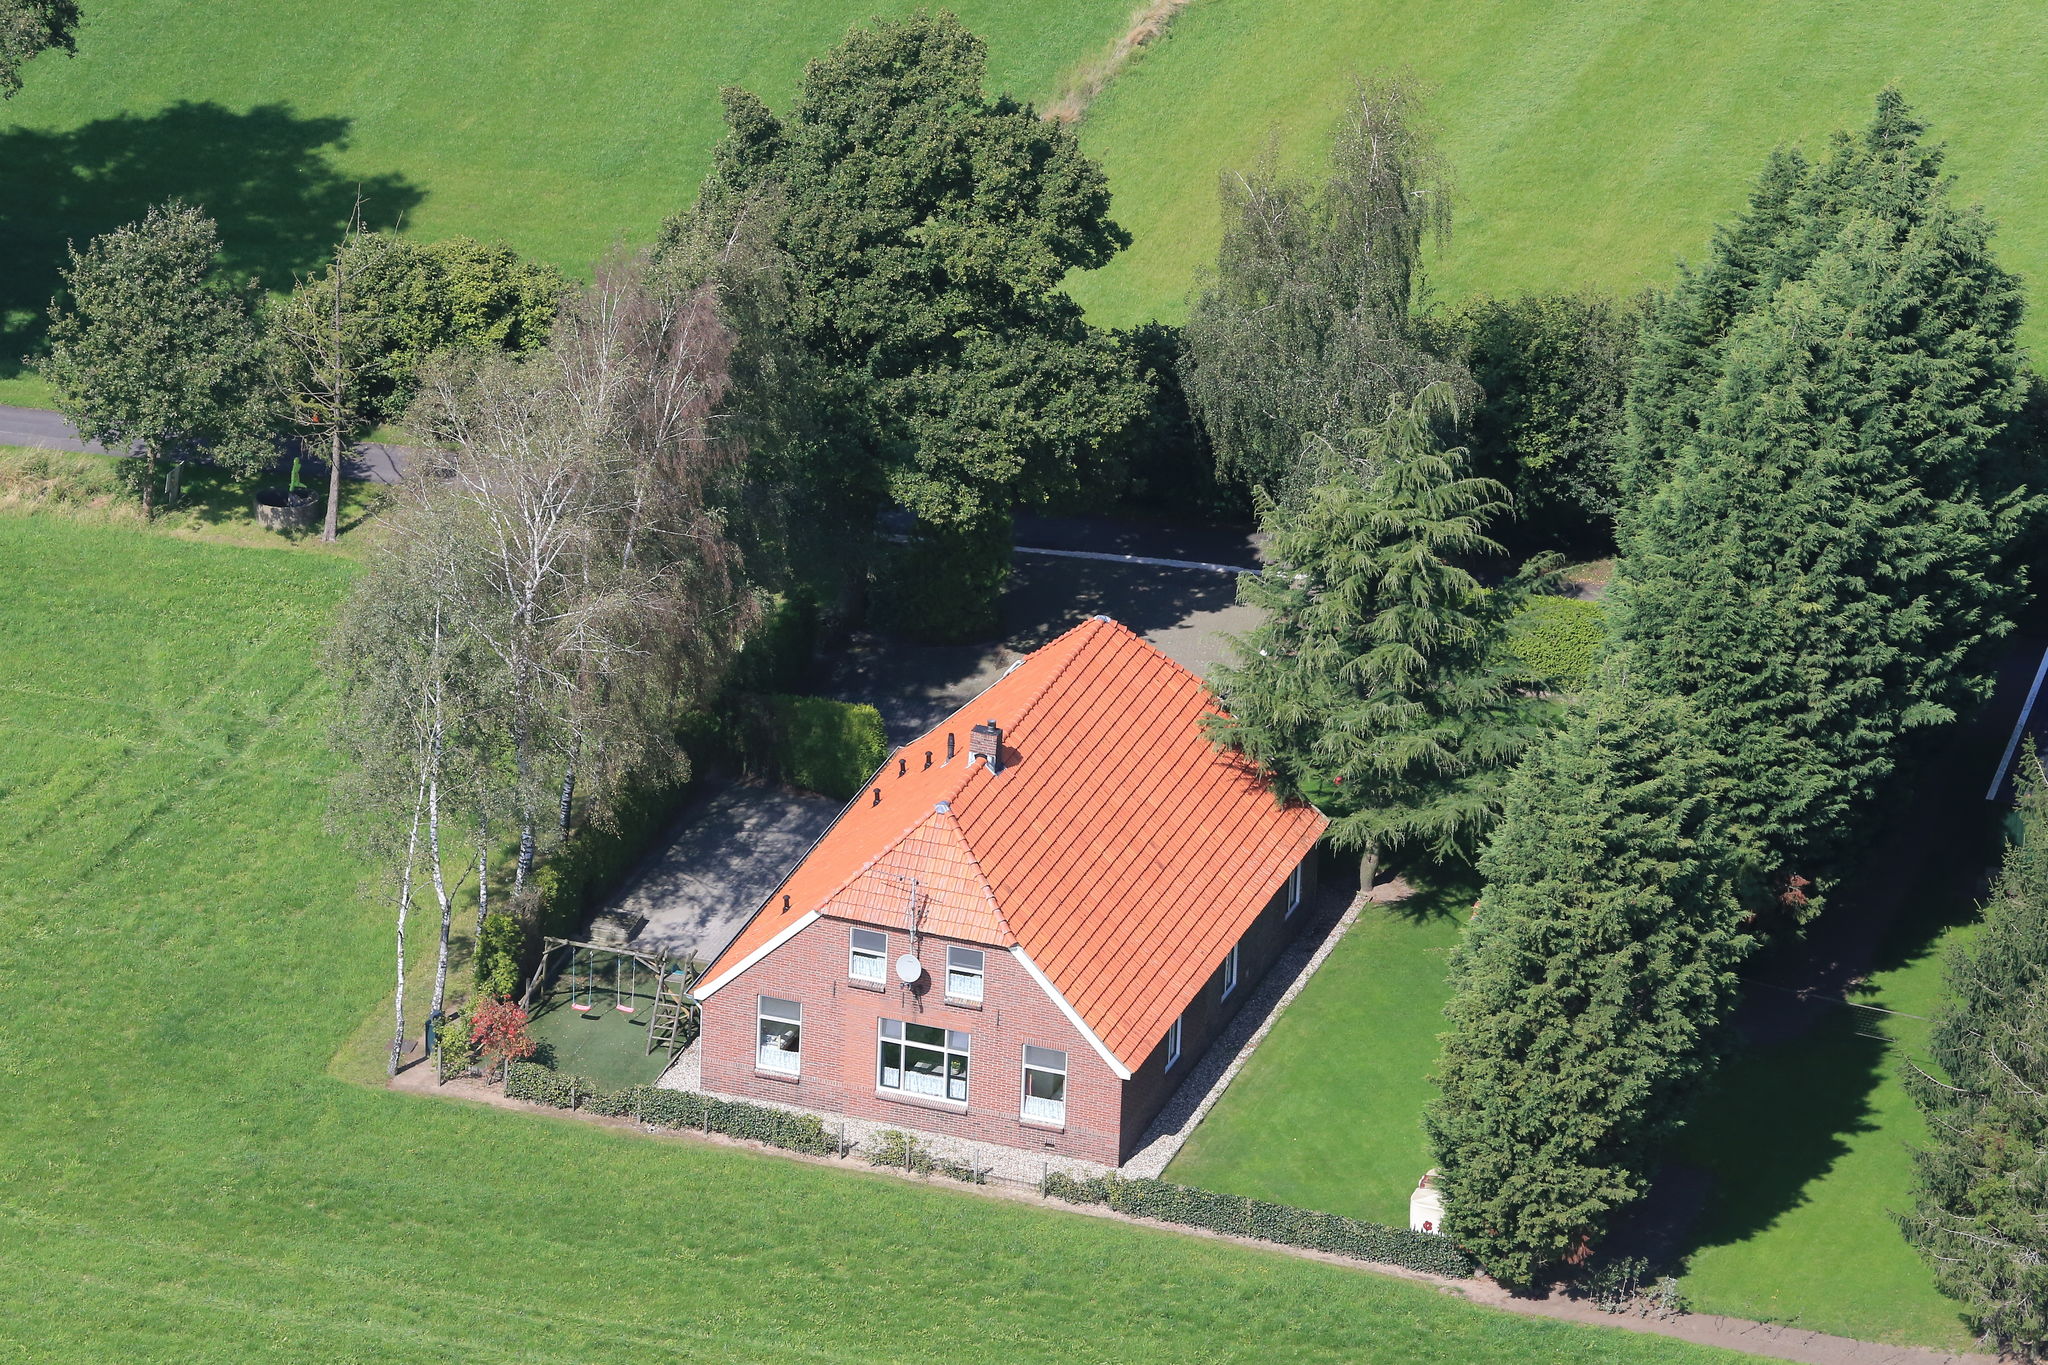 Detached farmhouse with play loft